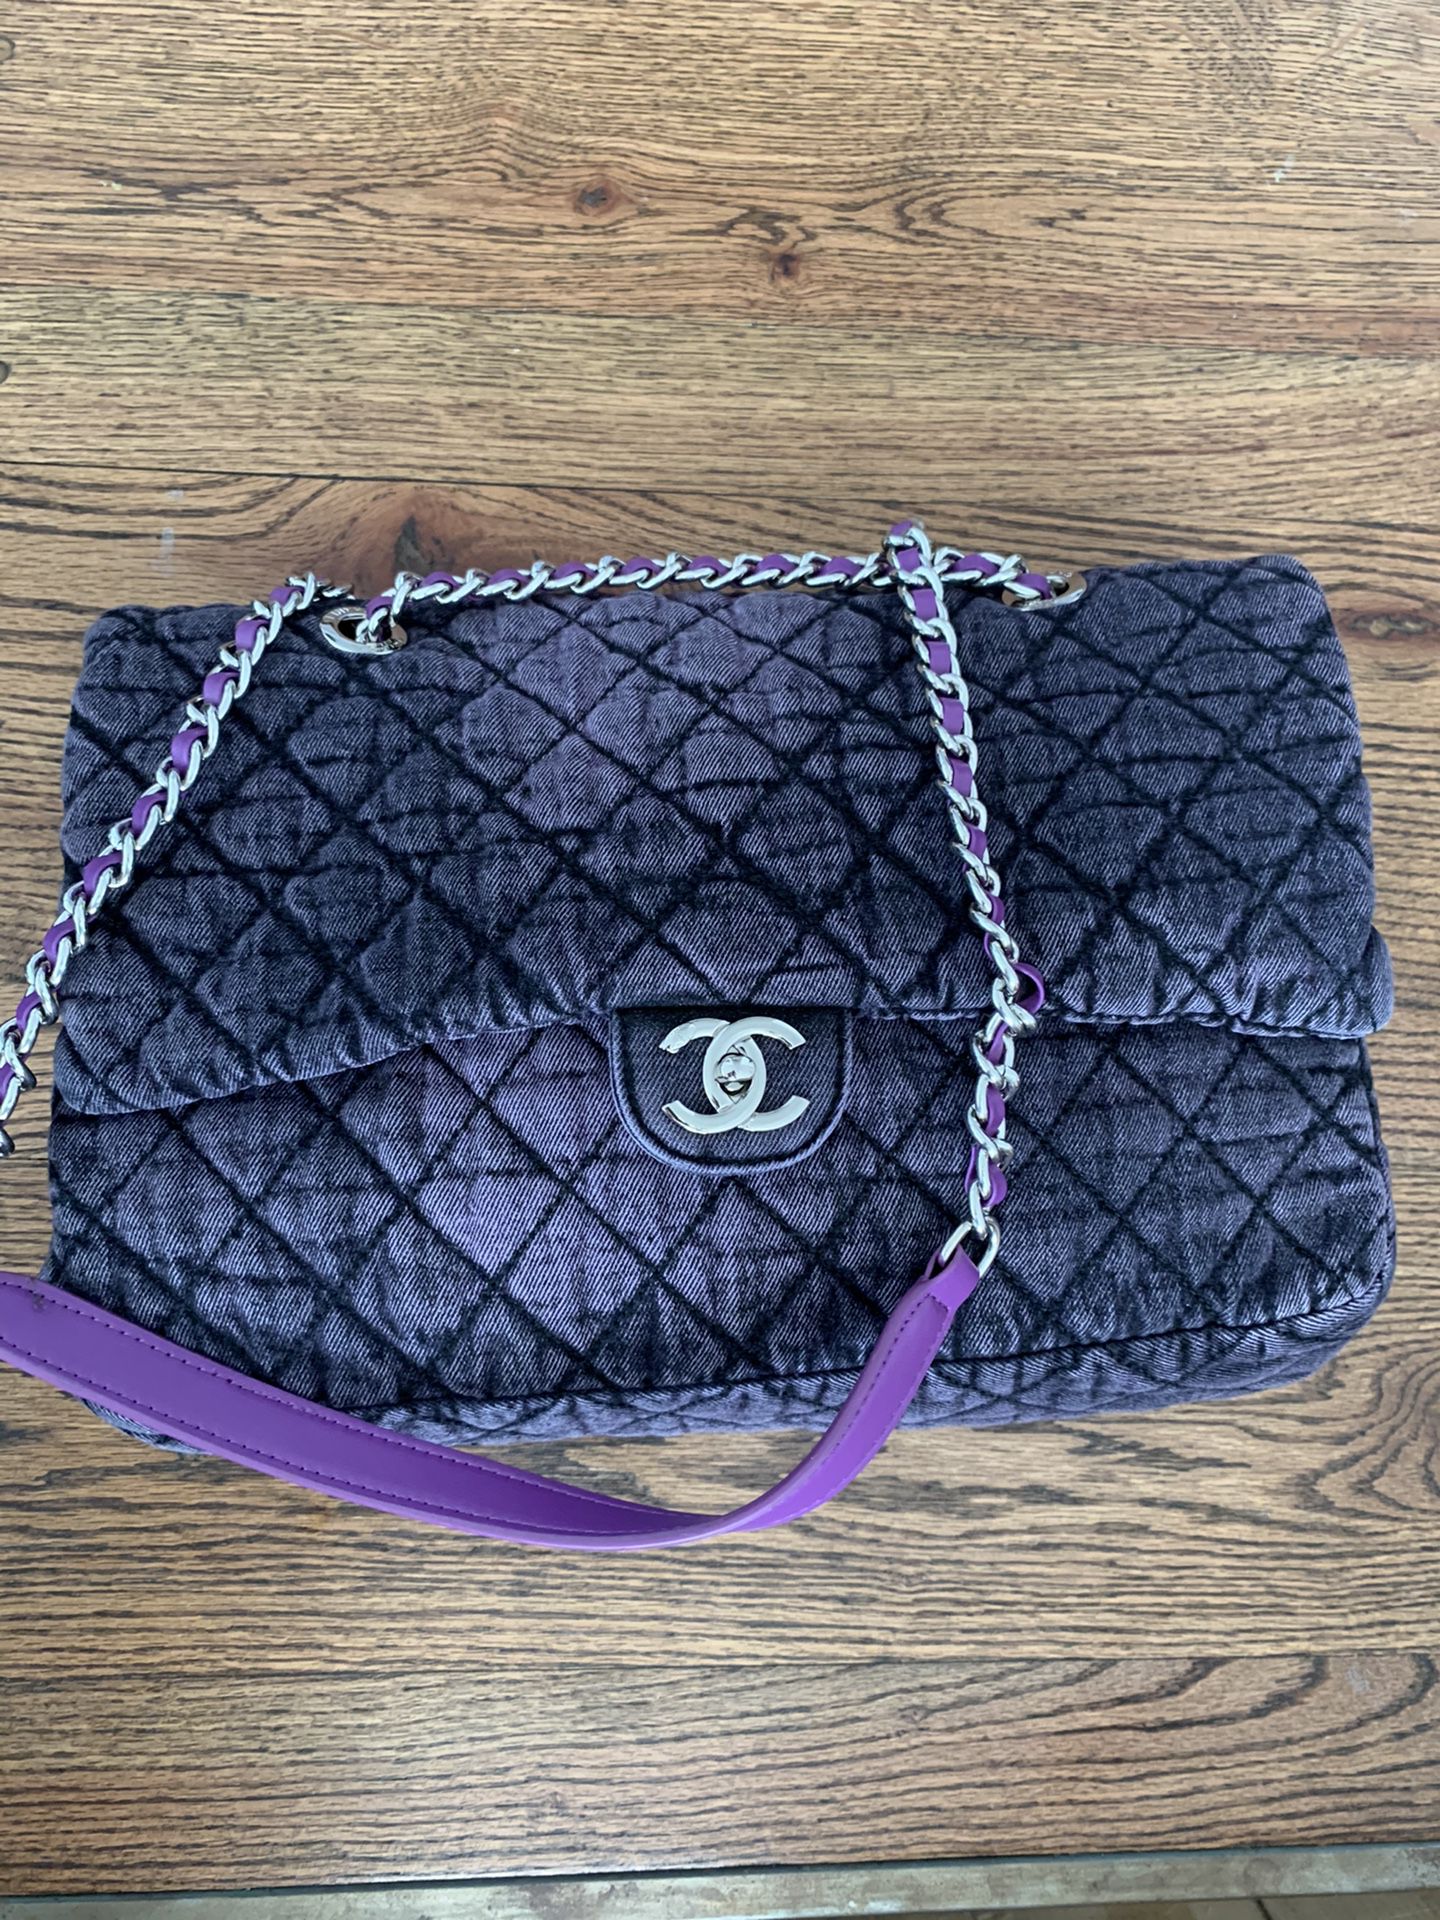 Chanel cruise 2020 denim medium purple flap bag